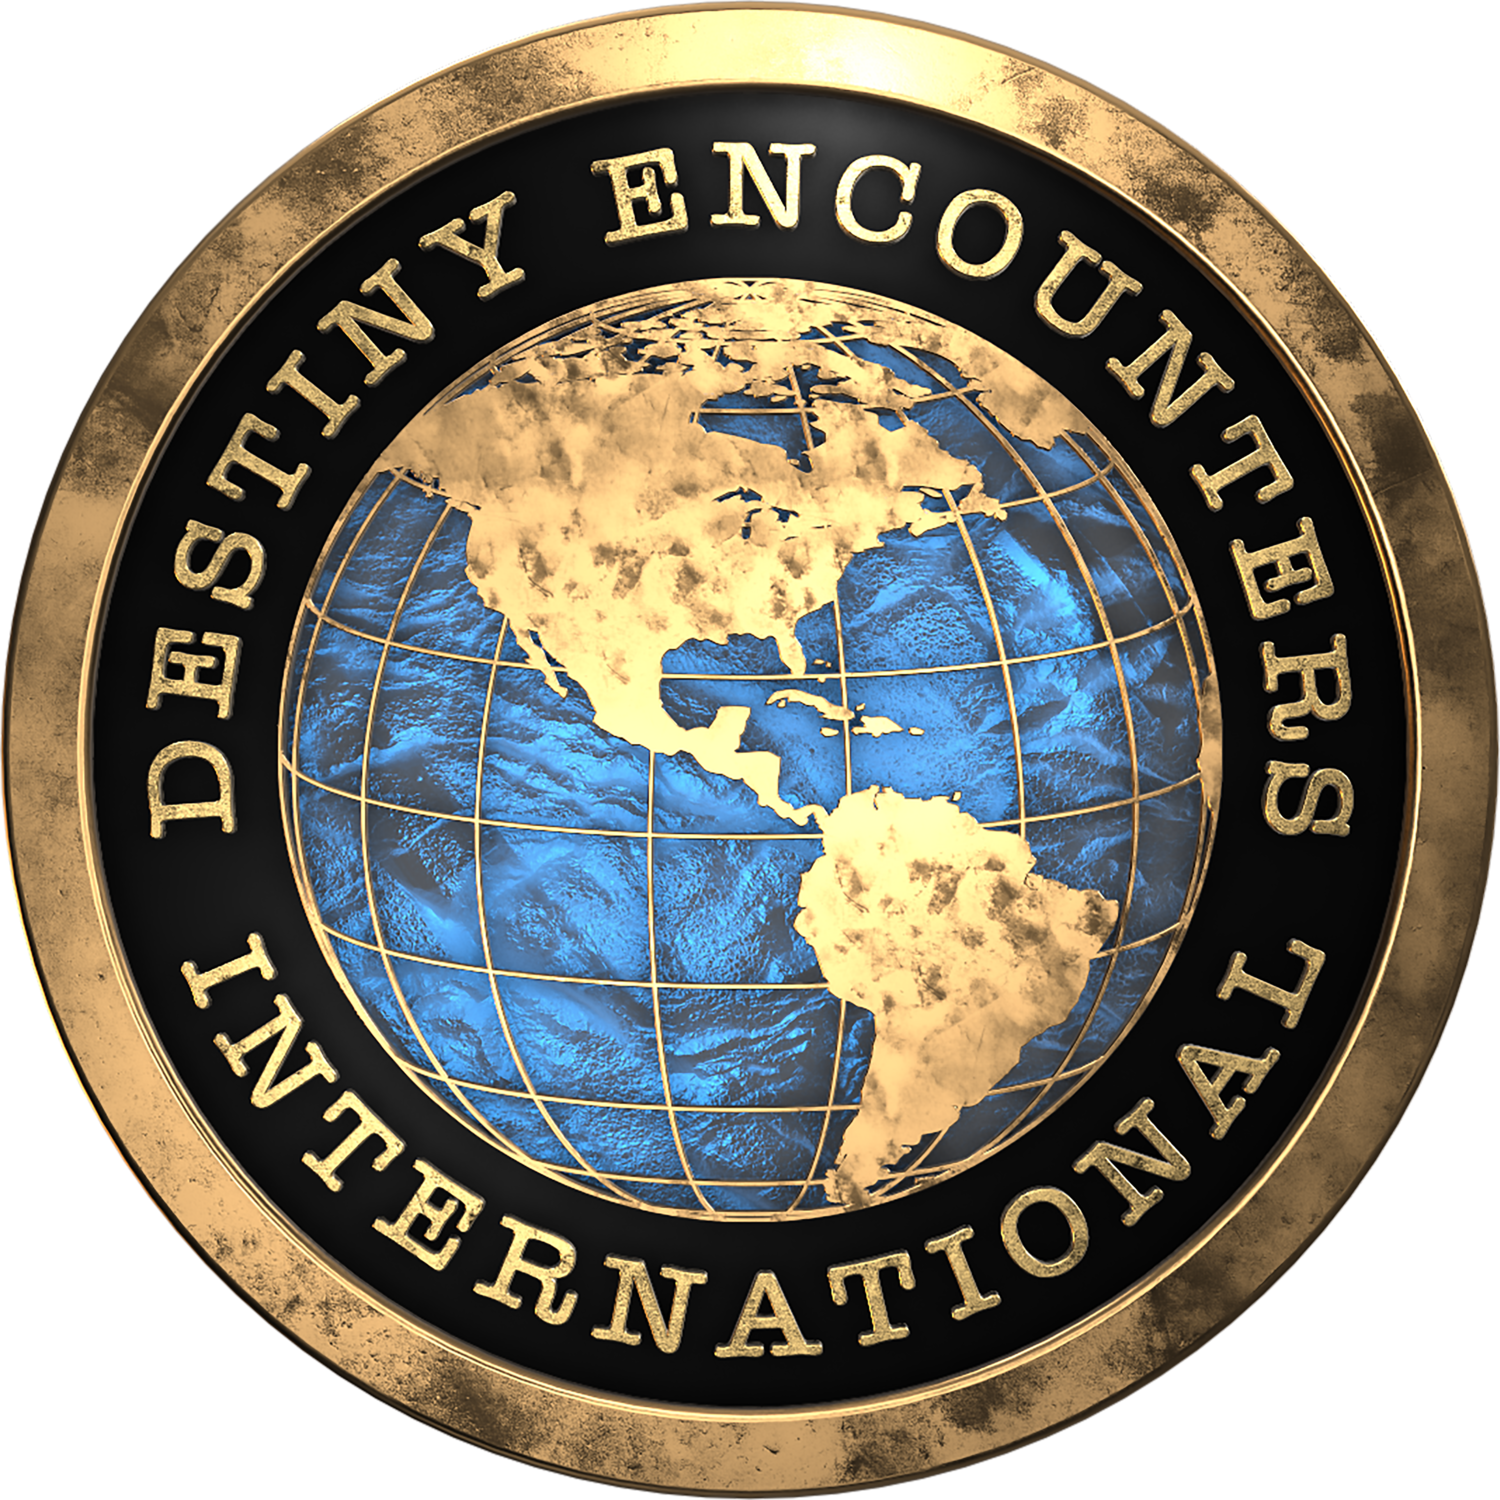 Destiny Encounters International